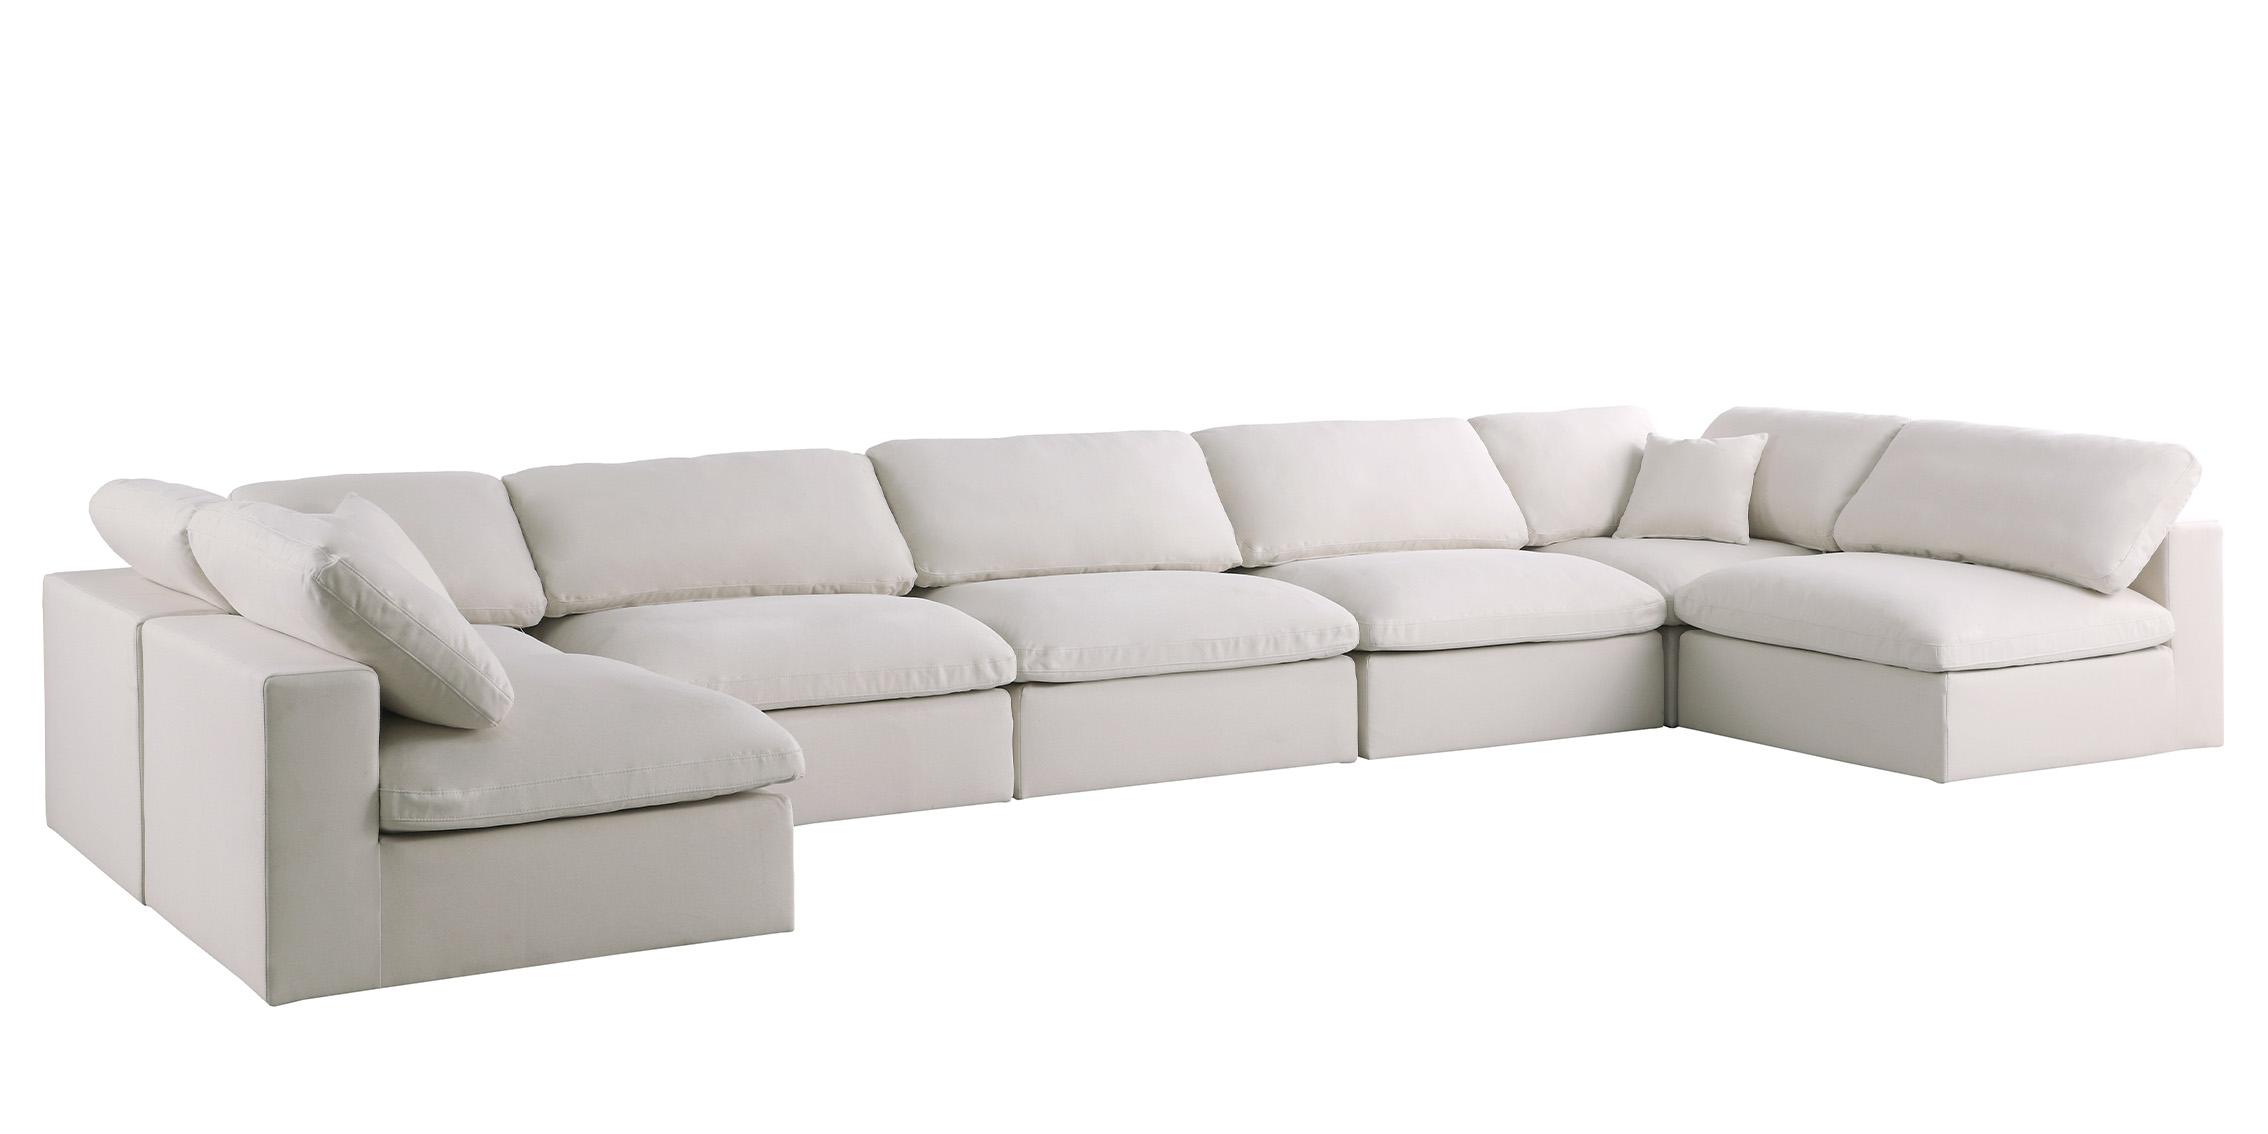 Contemporary, Modern Modular Sectional Sofa 602Cream-Sec7B 602Cream-Sec7B in Cream Fabric